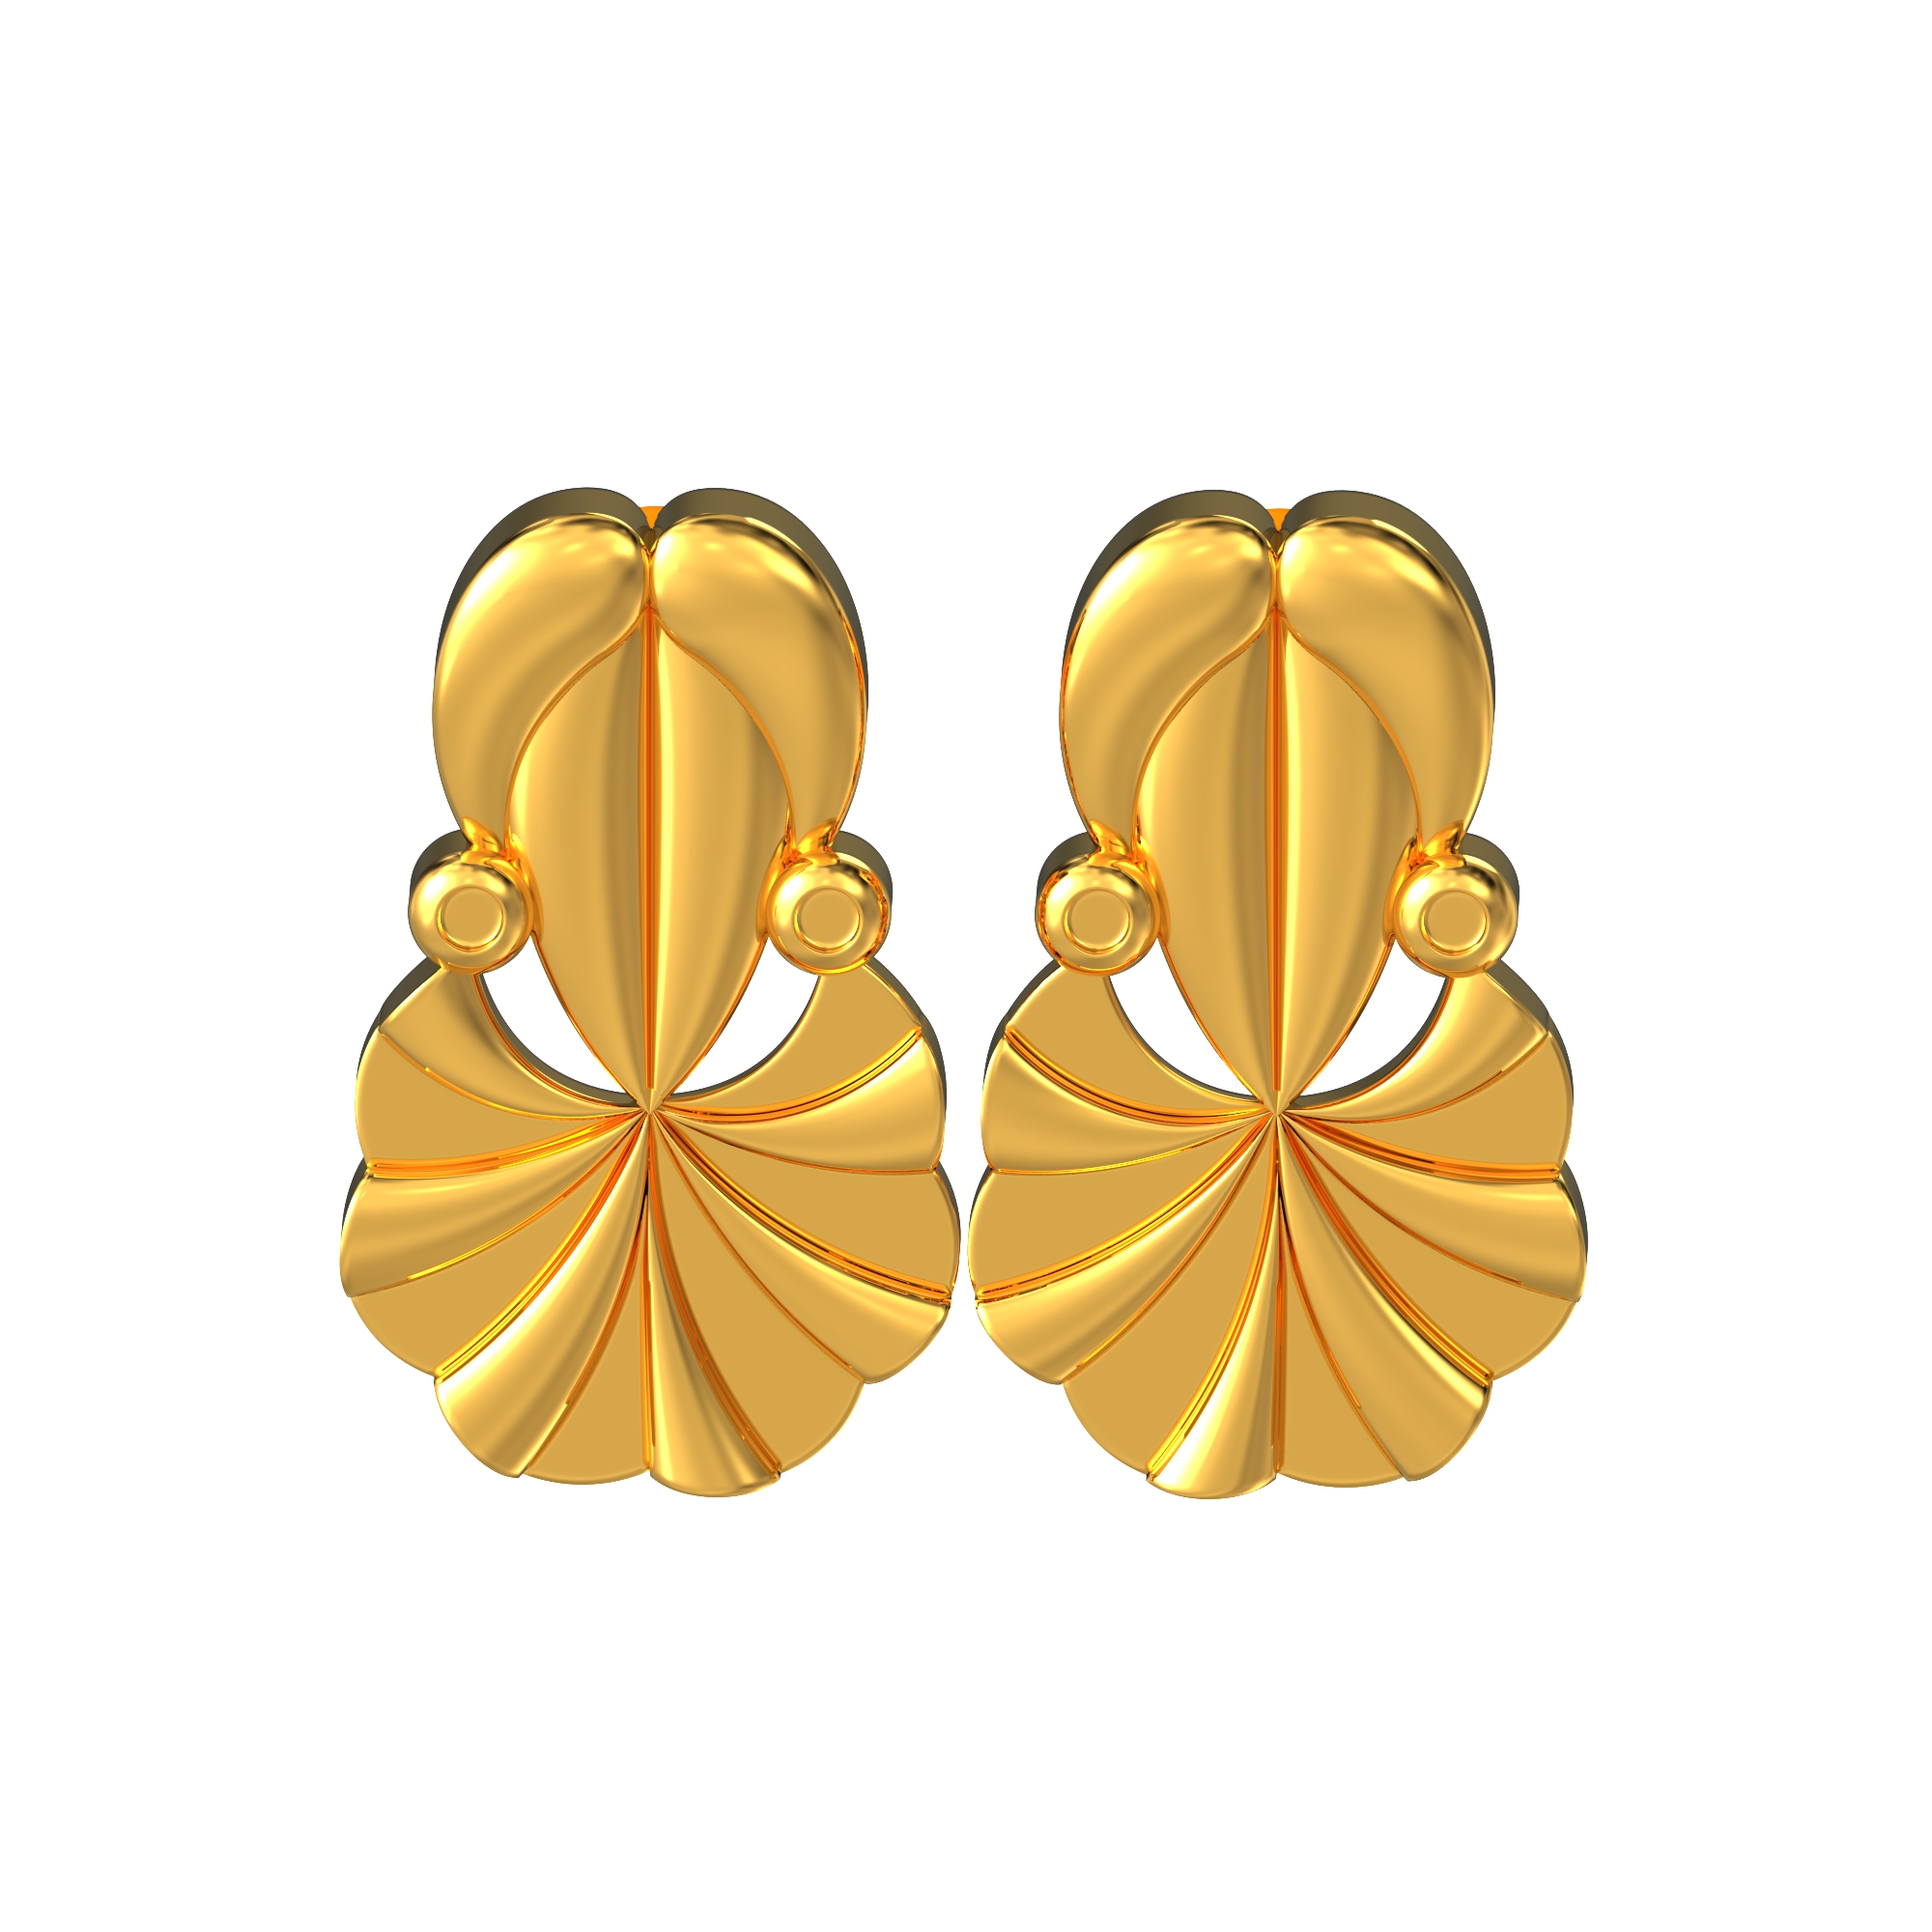 Best gold jewellery manufacturers in thirumilazai